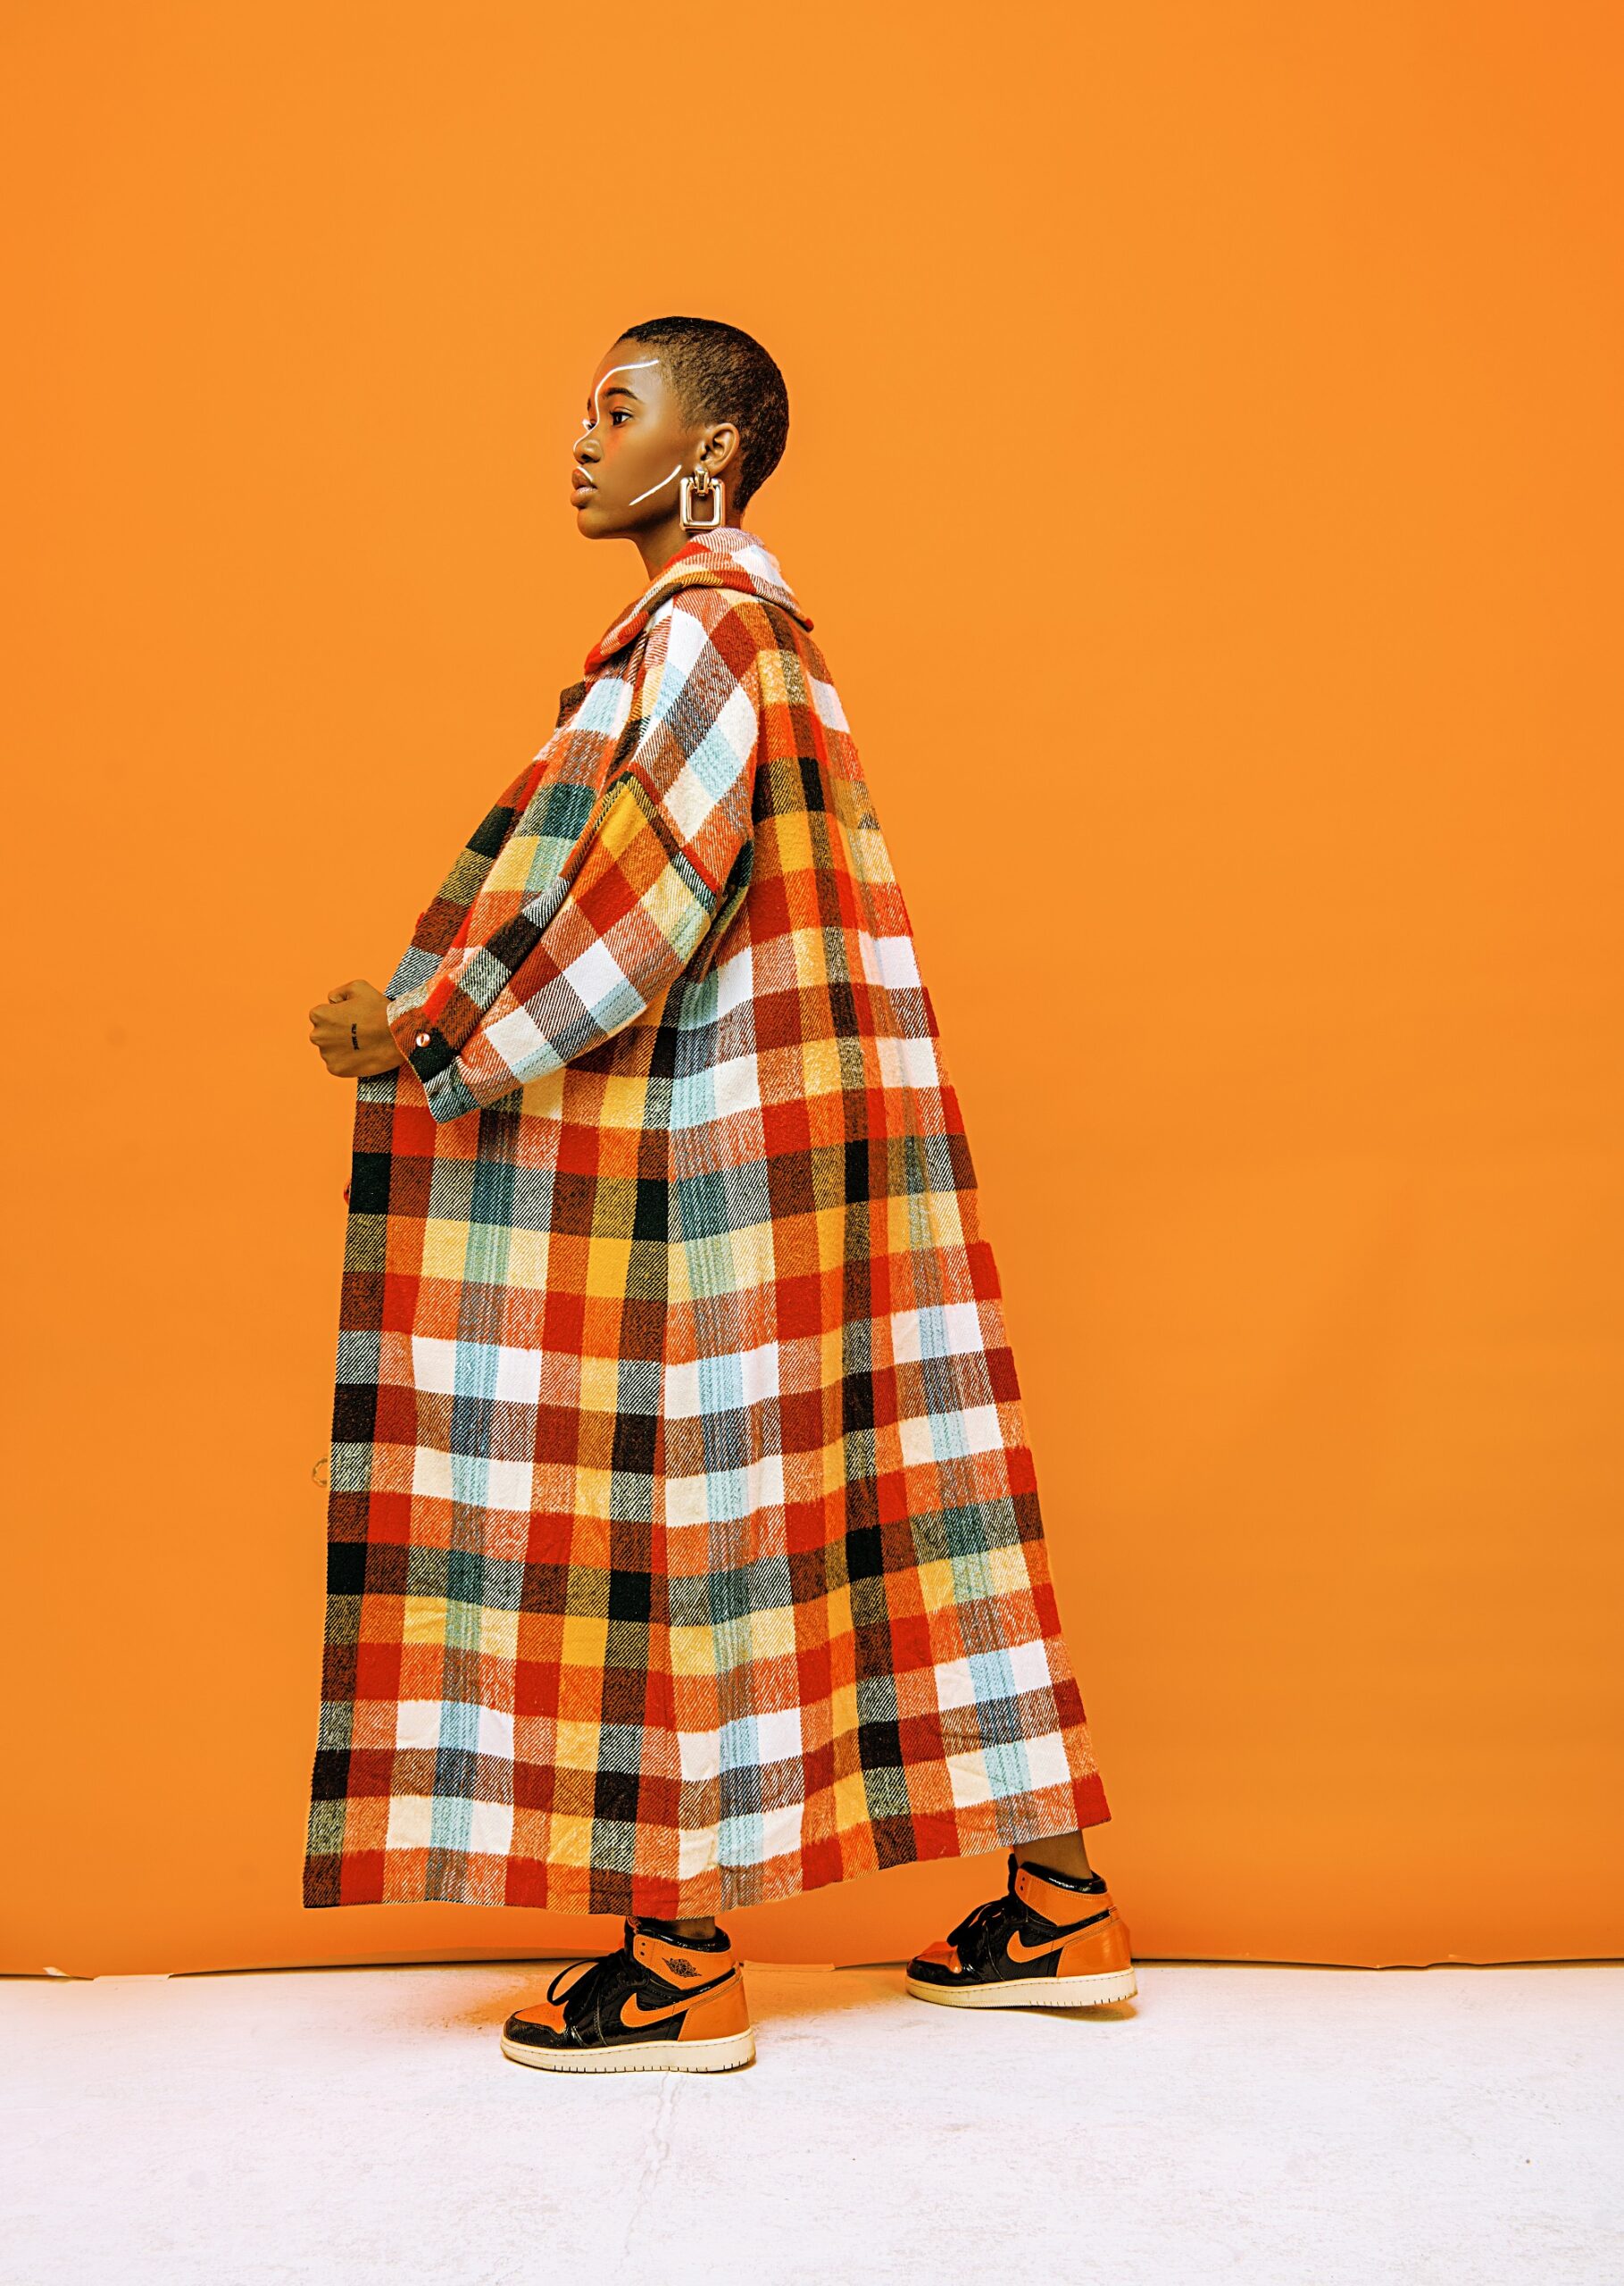 Design Indaba's 5 Creatives: Look Out for Lukhanyo Mdingi